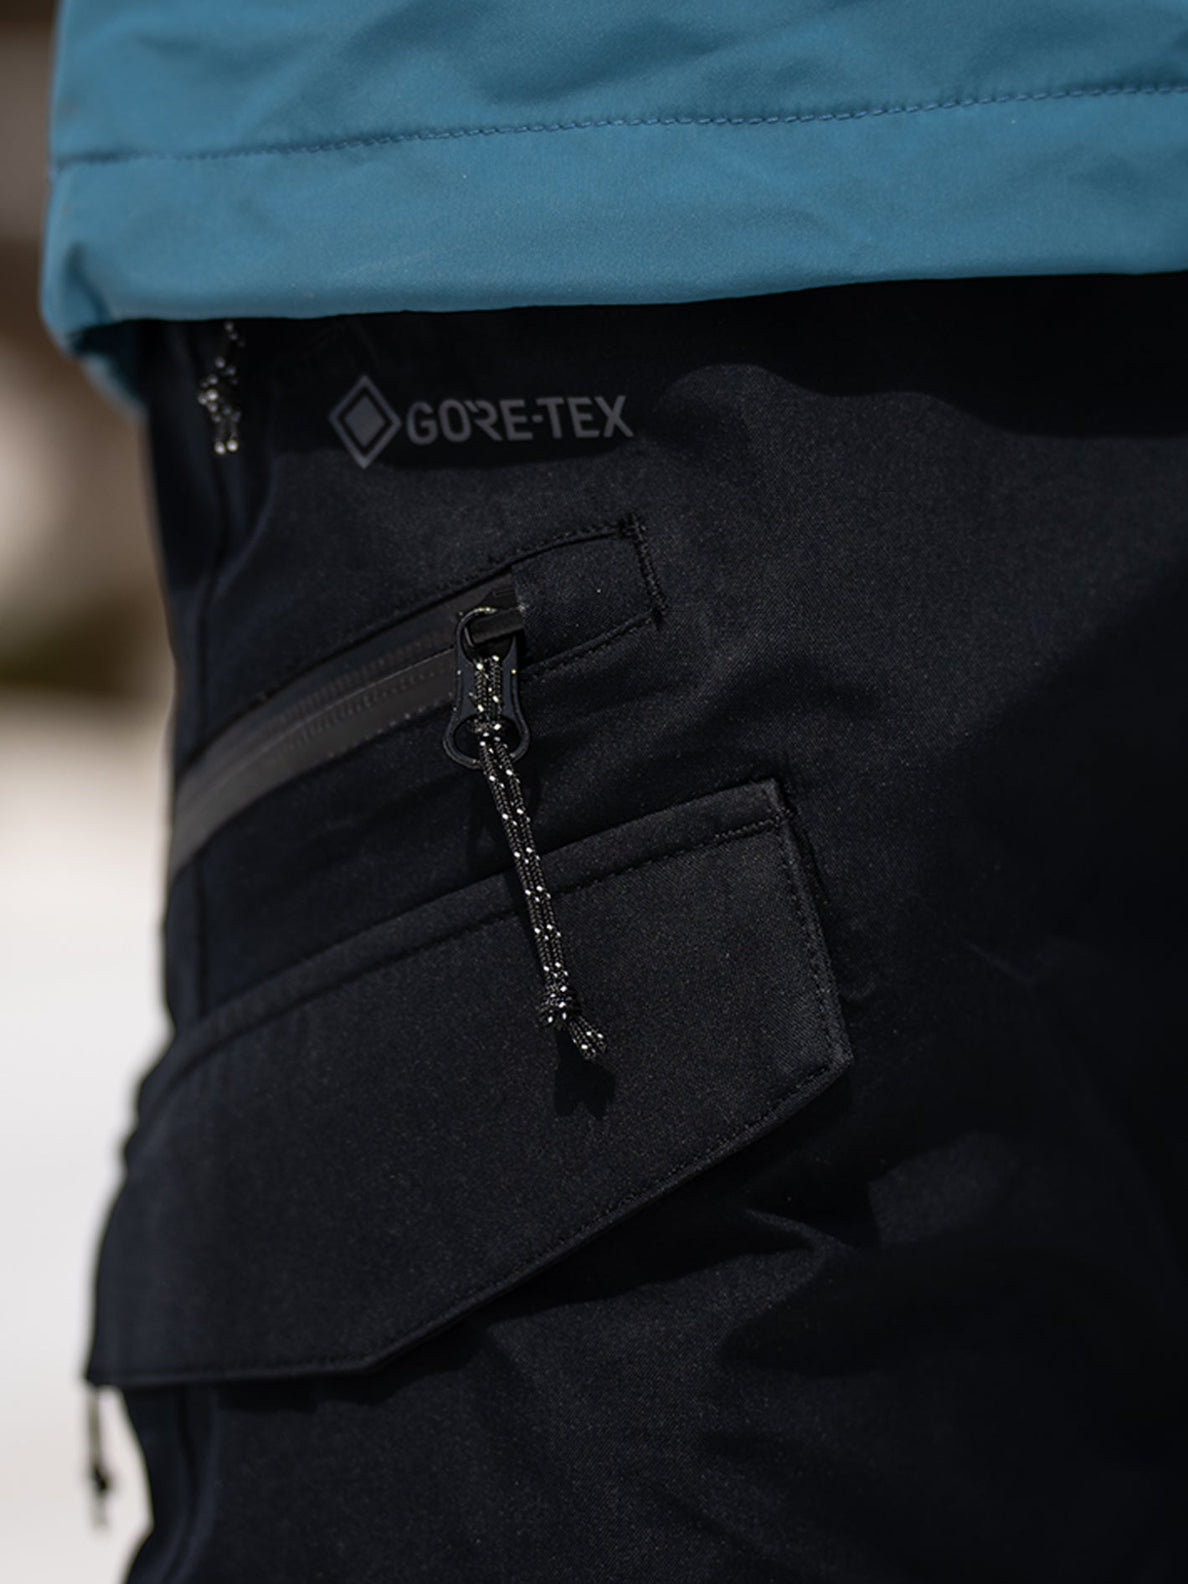 Pantalón de snowboard Mujer Volcom Aston Gore-Tex Pant - Black